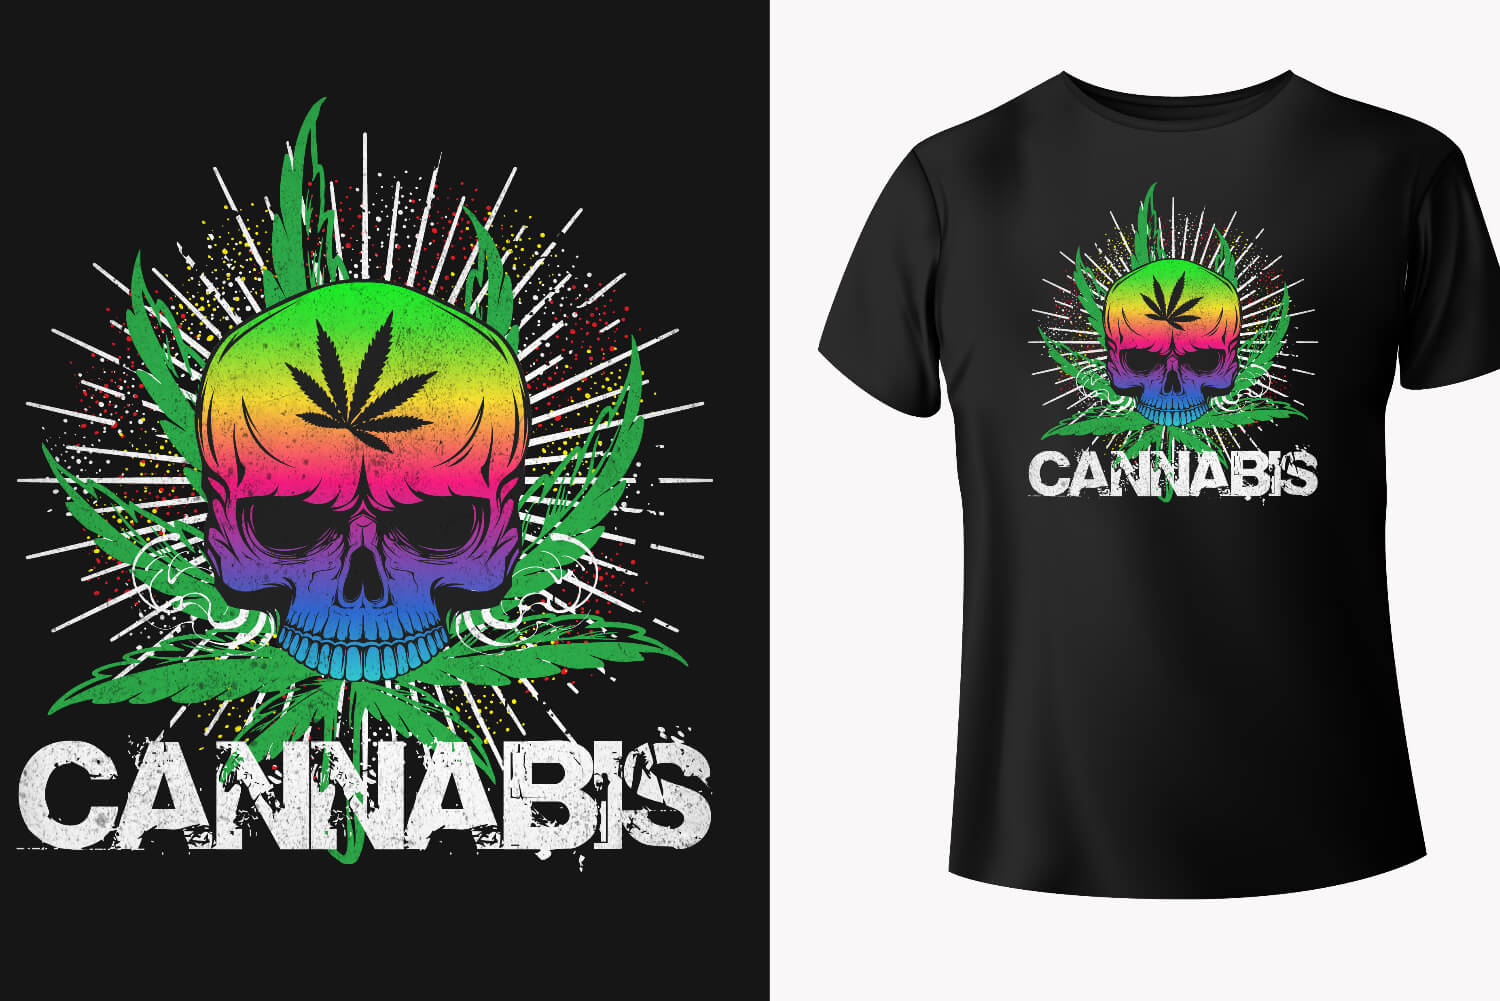  cannabis-themed t-shirt